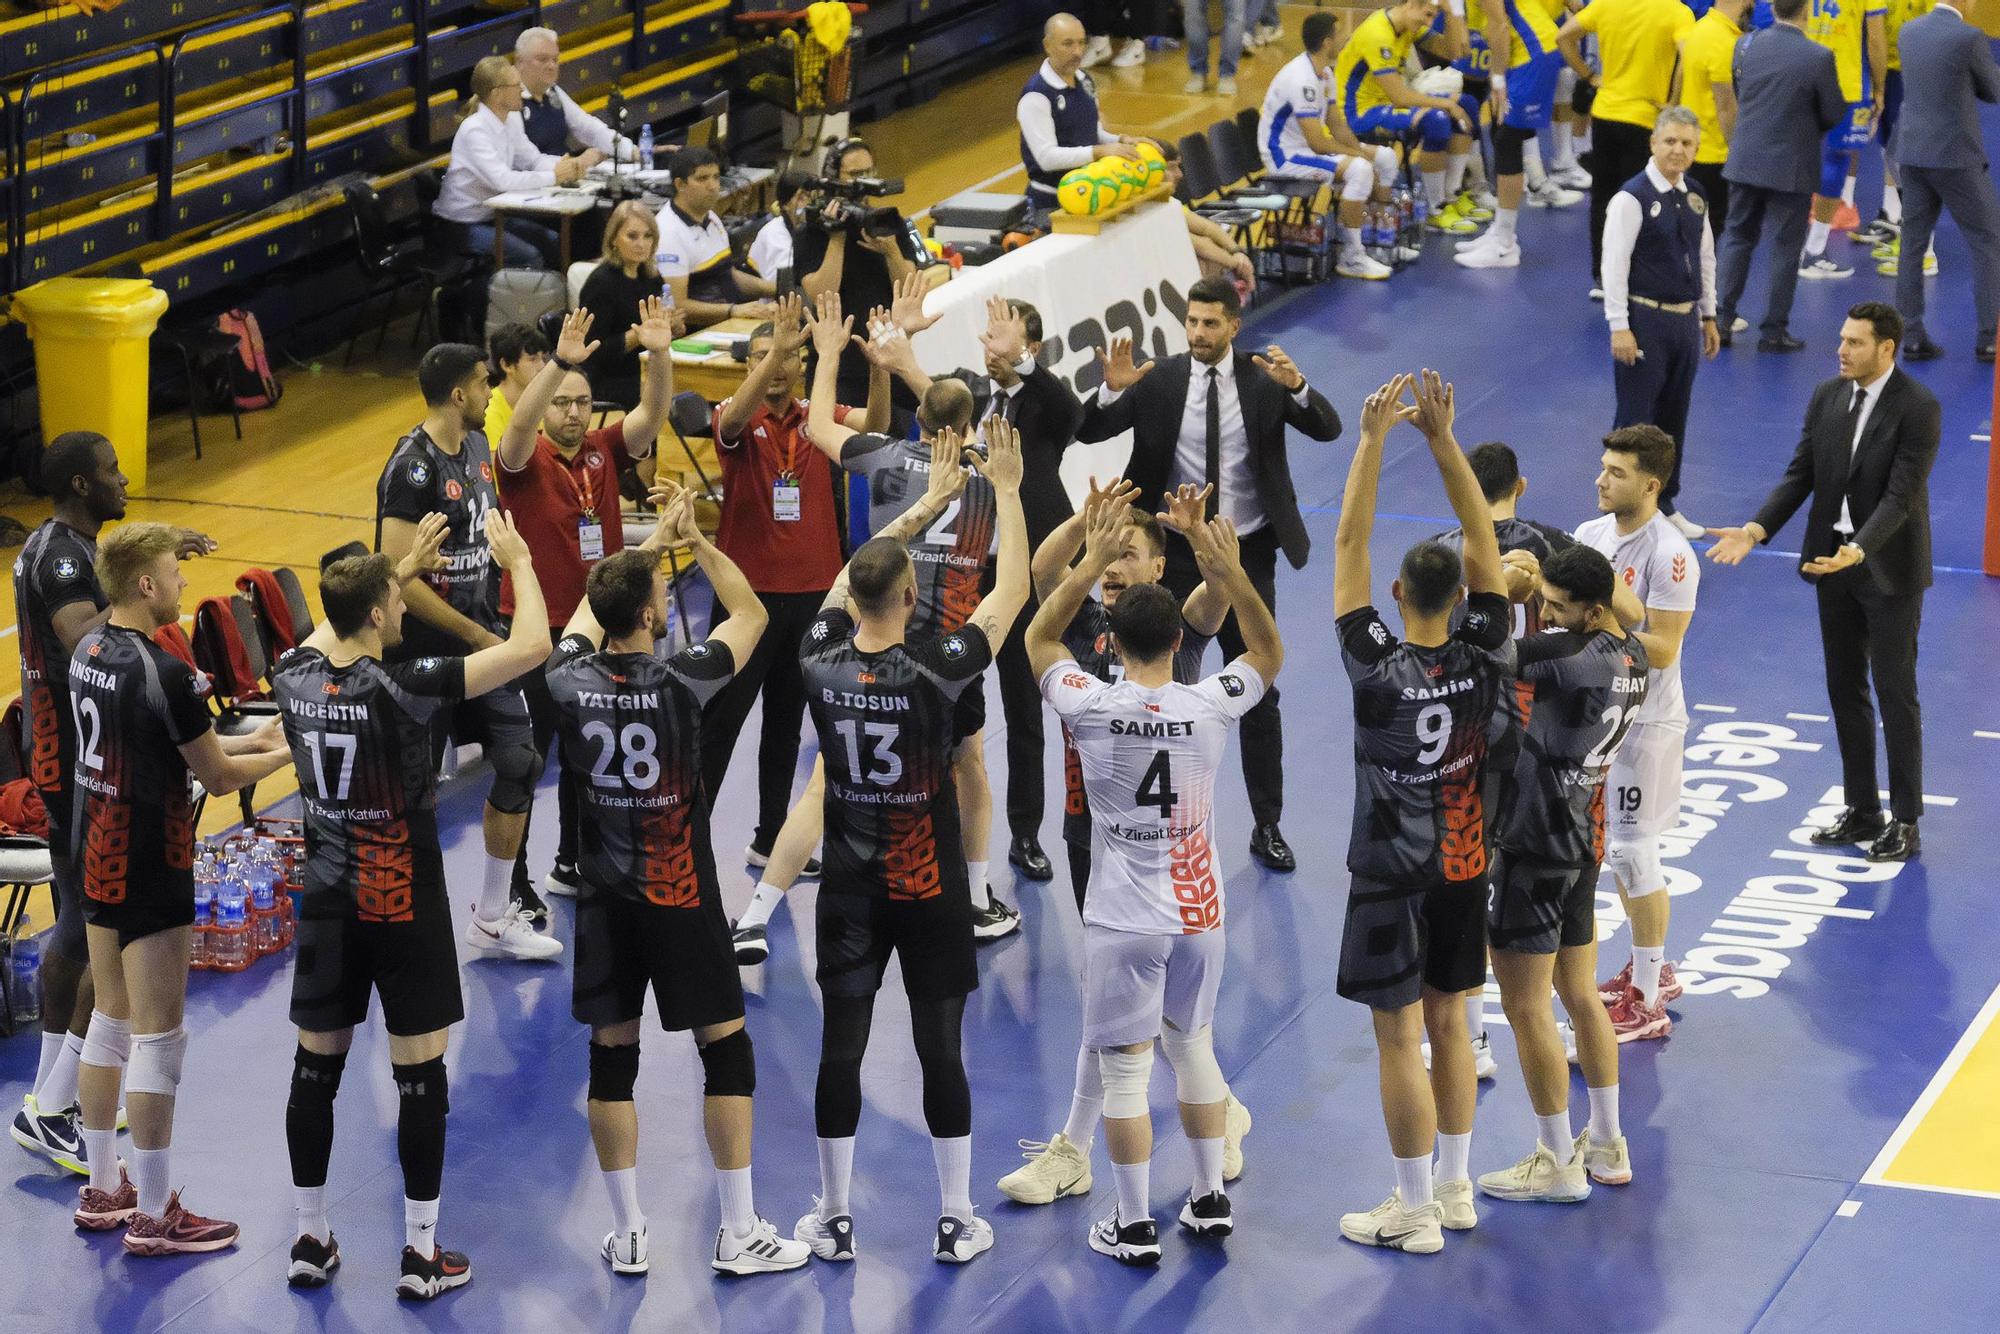 Voleibol | Cuartos de final de Champions: Guaguas-Ankara